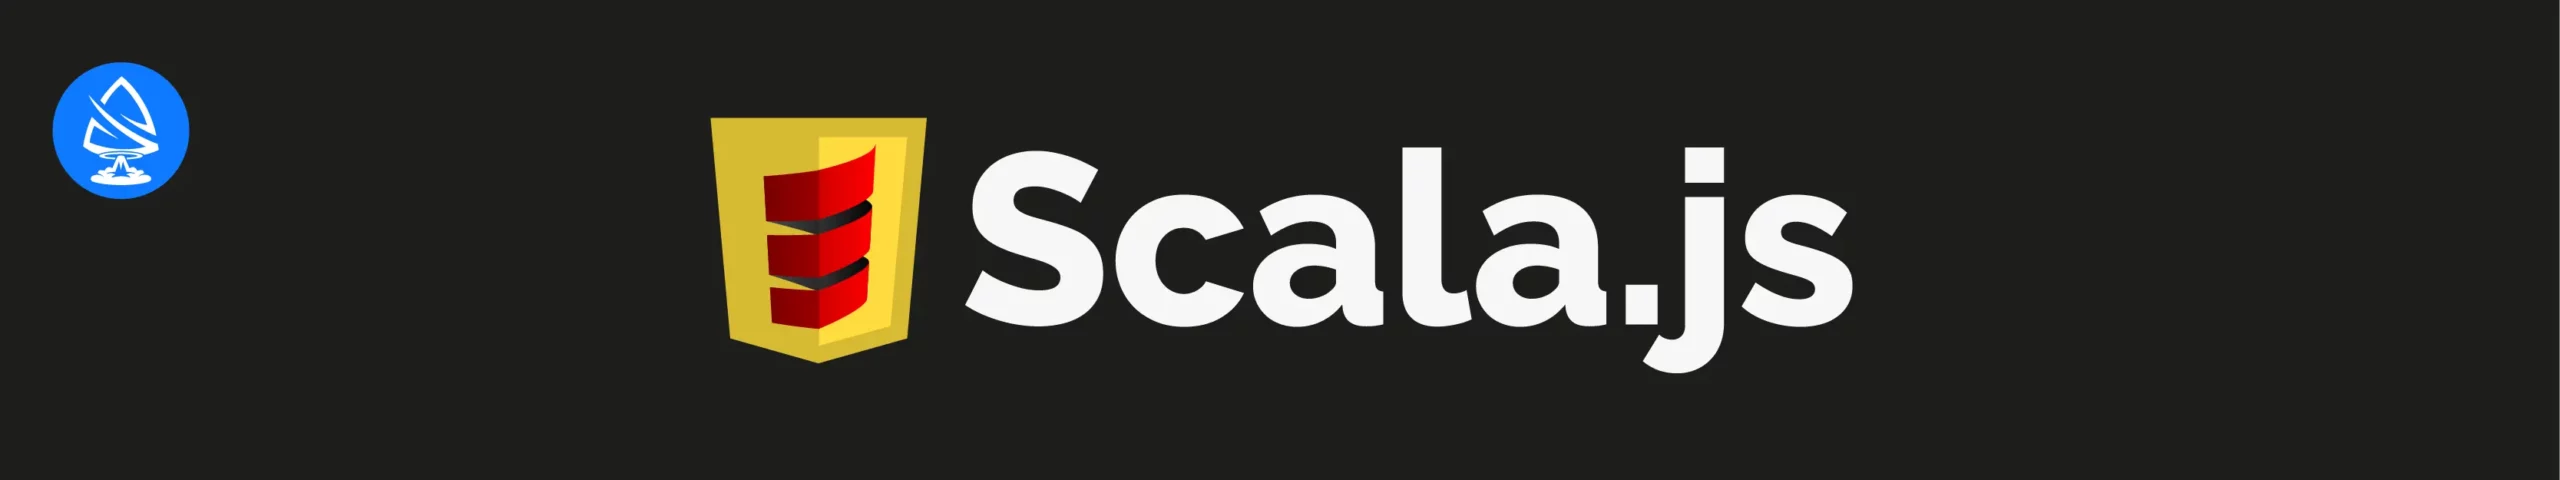 nodejs alternatives: Scala